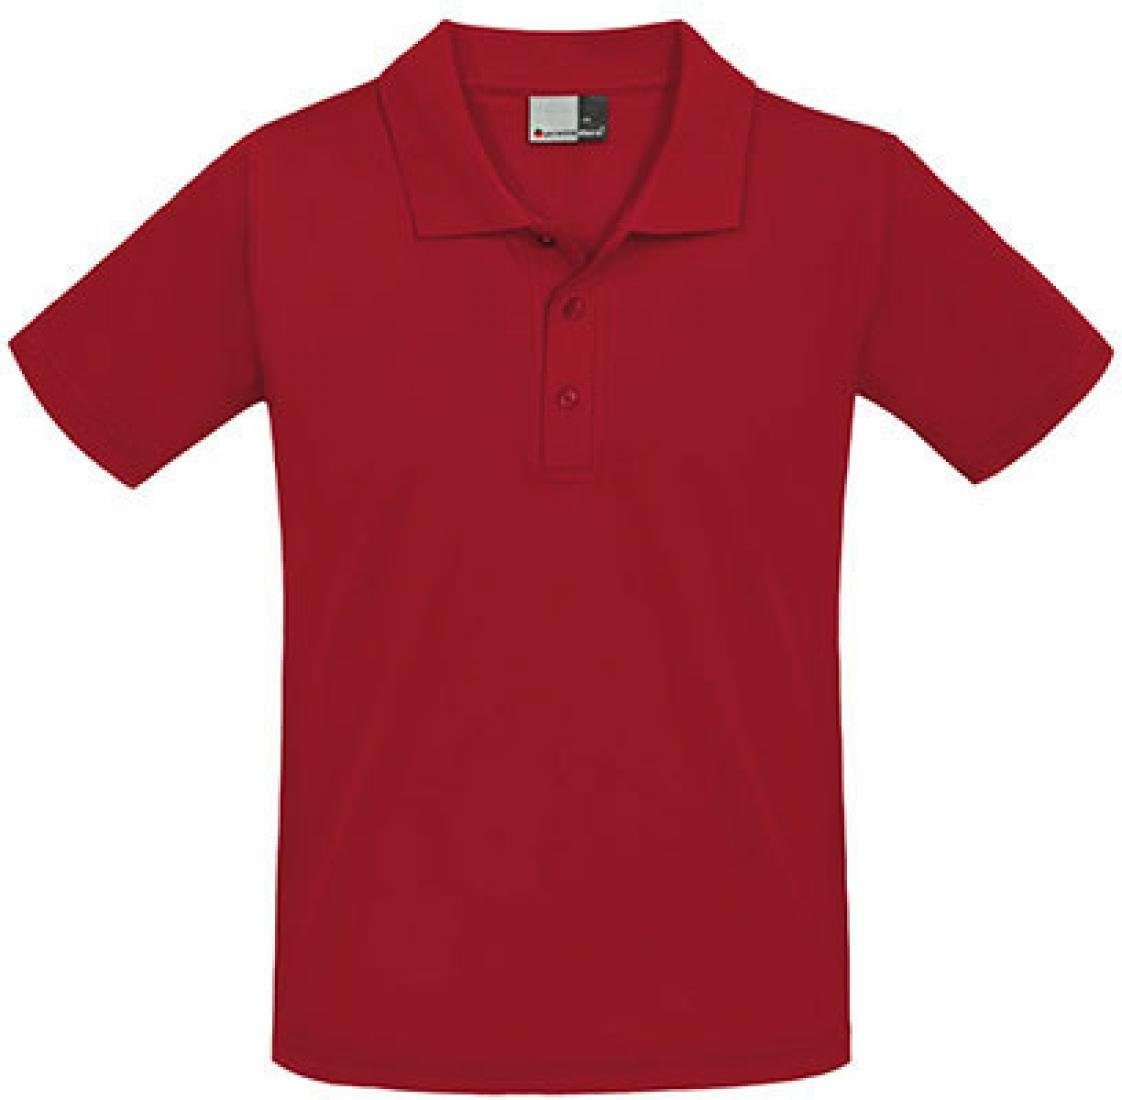 Rote Damen Poloshirts online kaufen | OTTO | Poloshirts